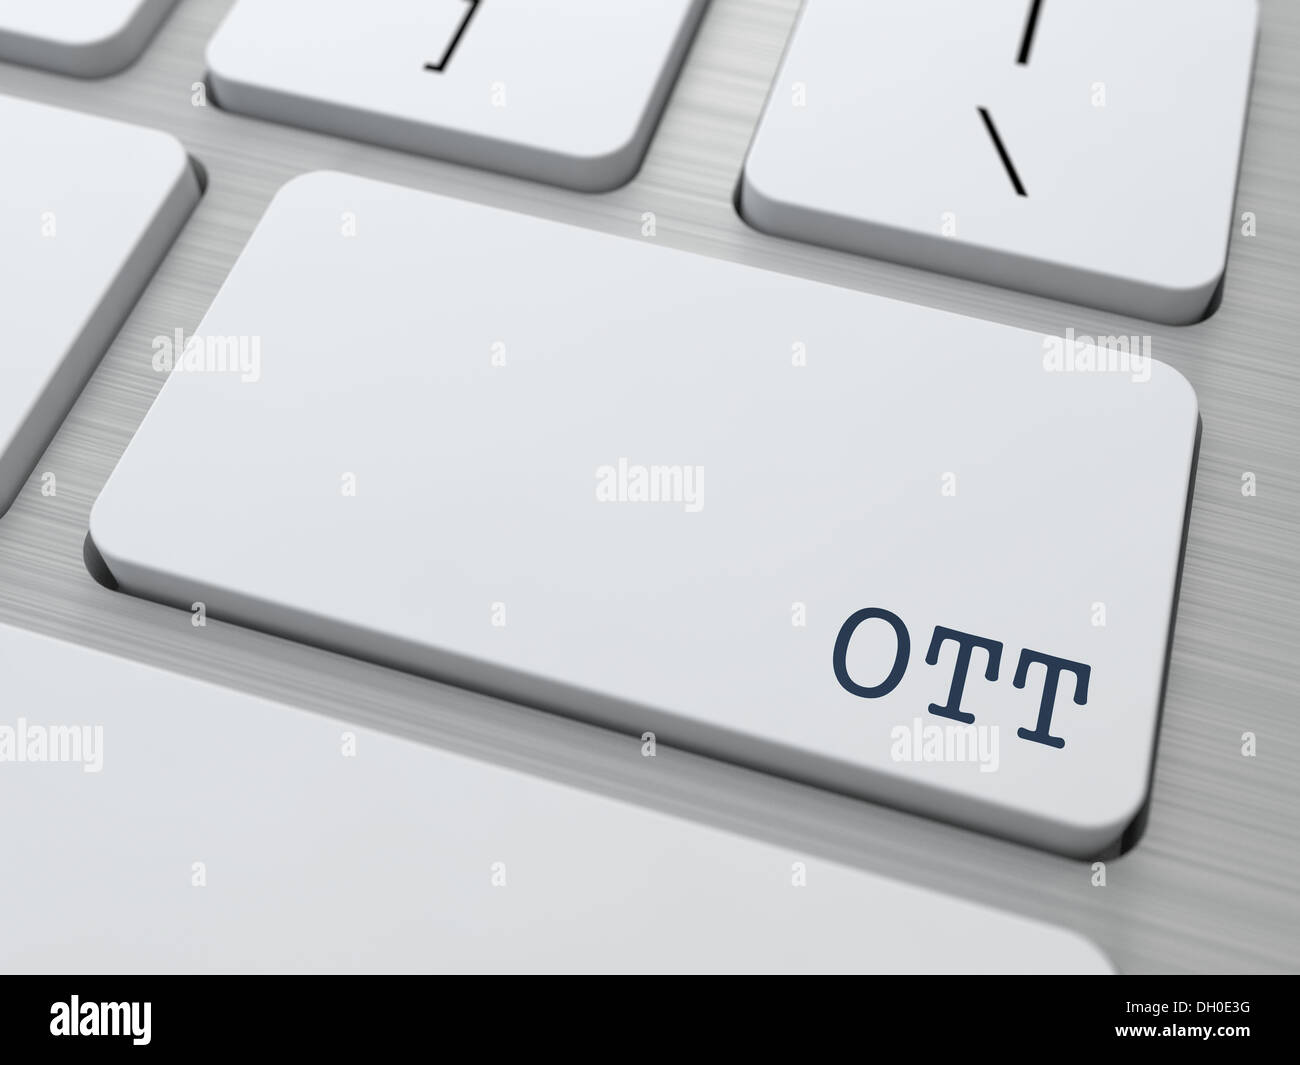 OTT.  Information Technology Concept. Stock Photo